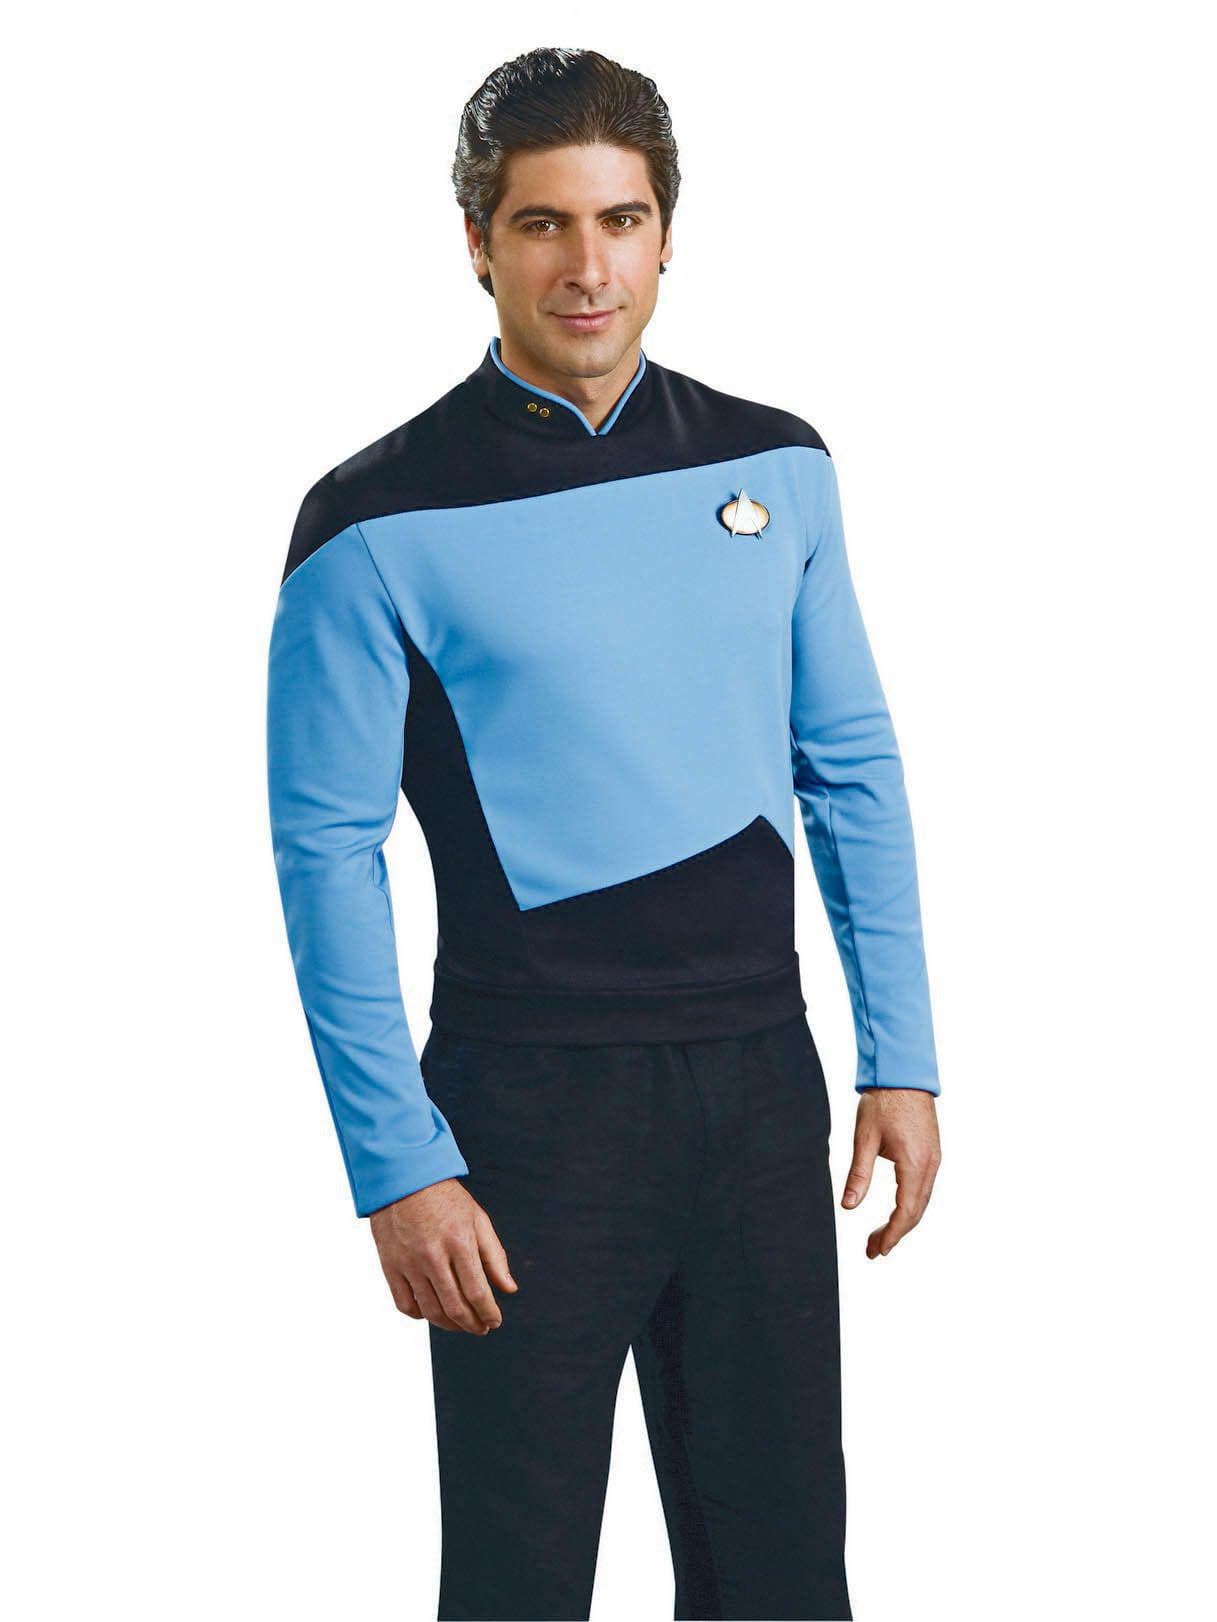 Star Trek: The Next Generation Men's Deluxe Science Uniform - Paramount Shop